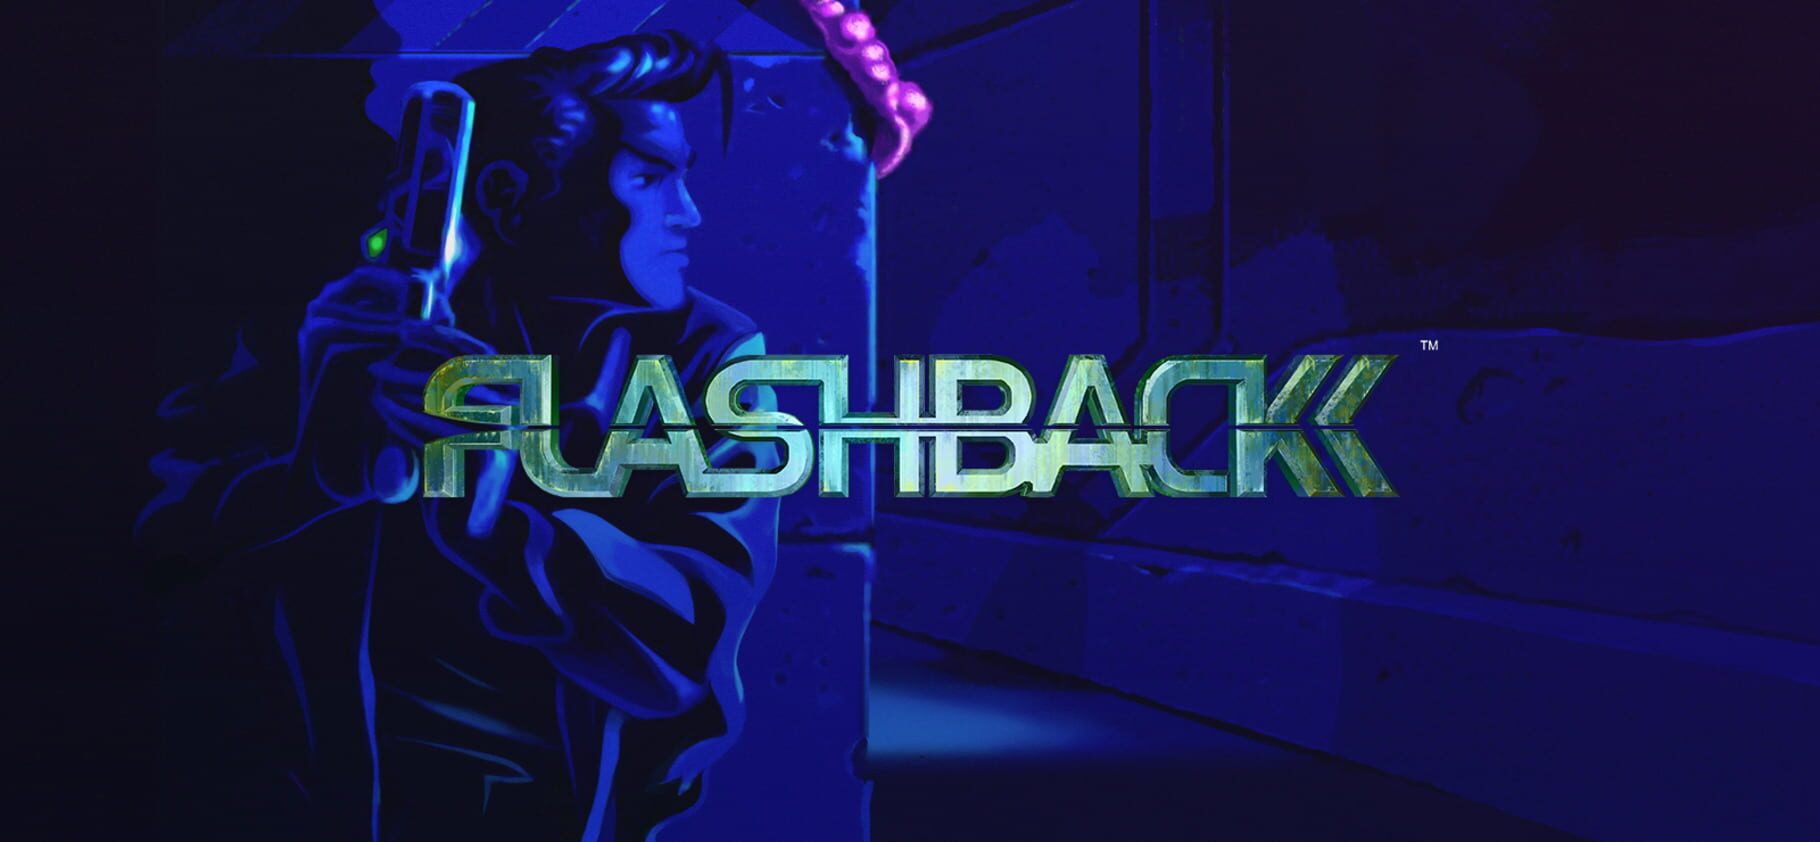 Flashback: 25th Anniversary artwork